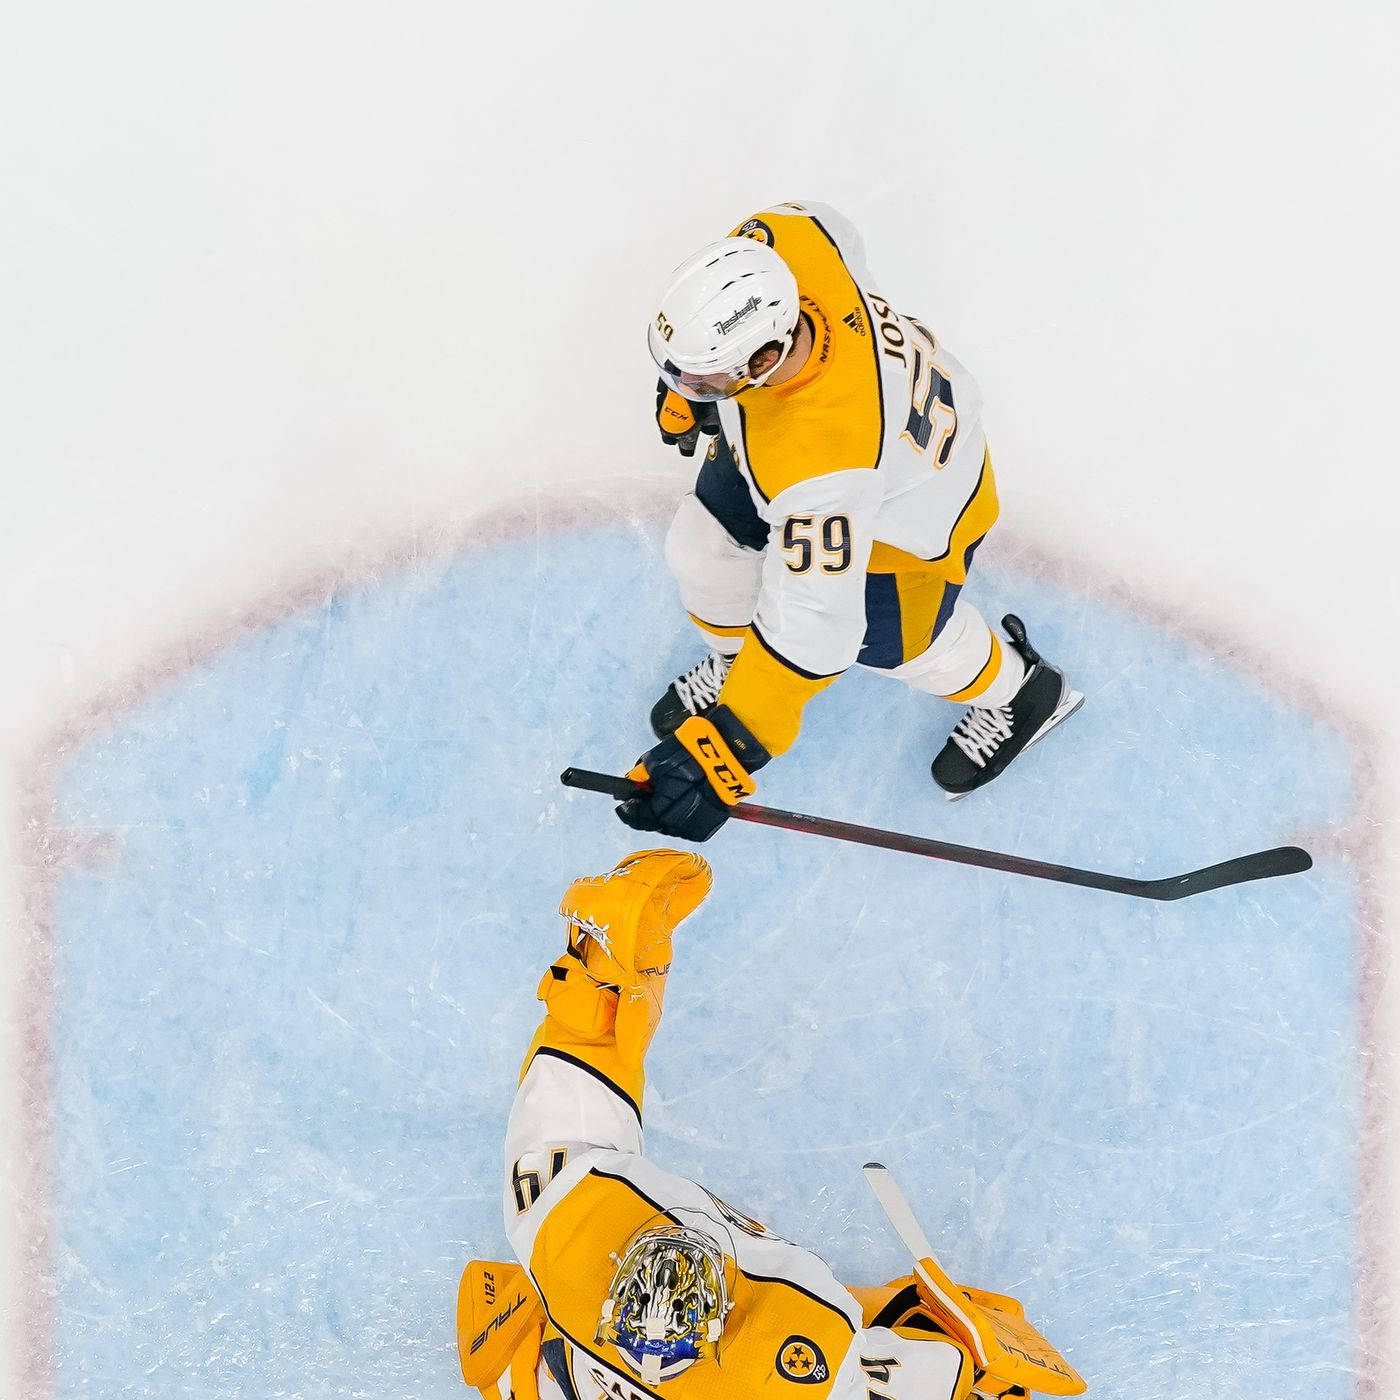 Download Hockey Player Roman Josi Digital Poster Art Wallpaper